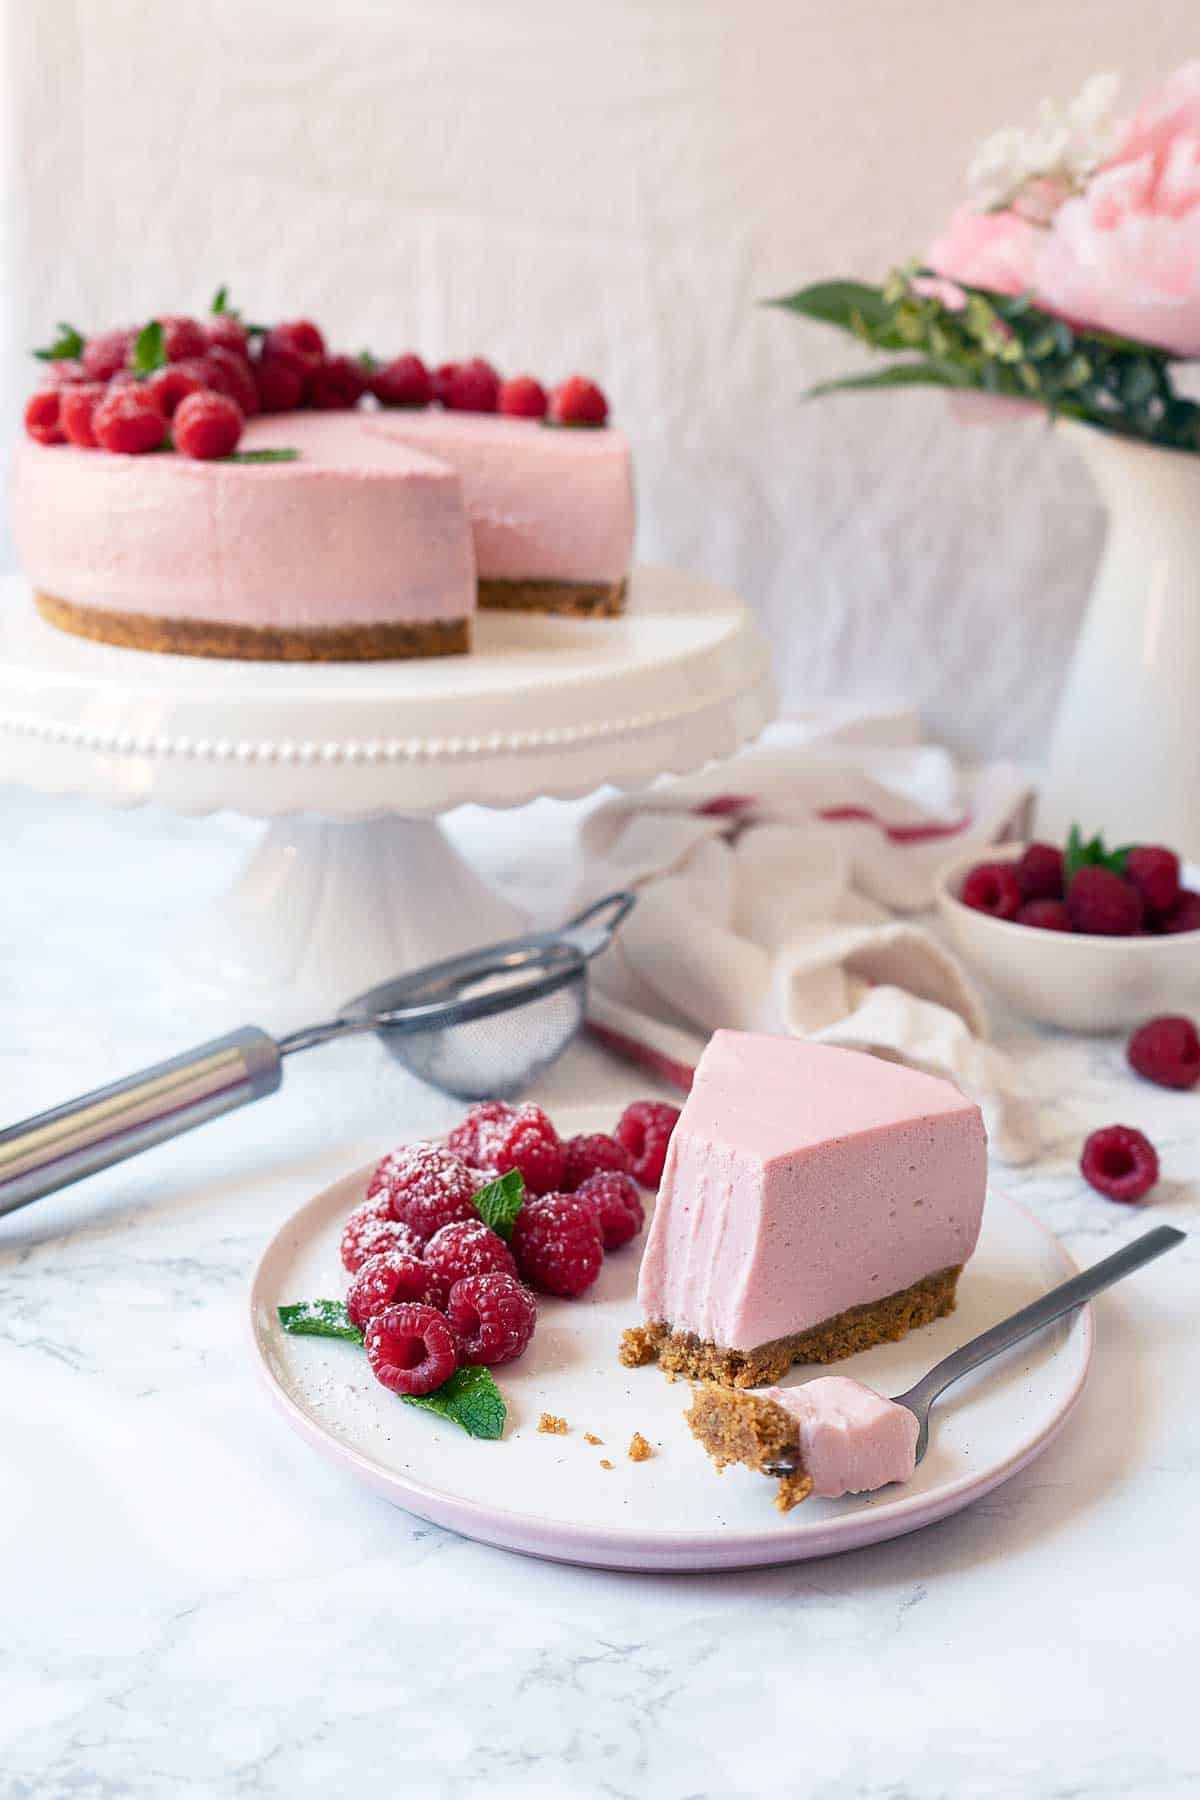 A served portion of no-bake raspberry cheesecake